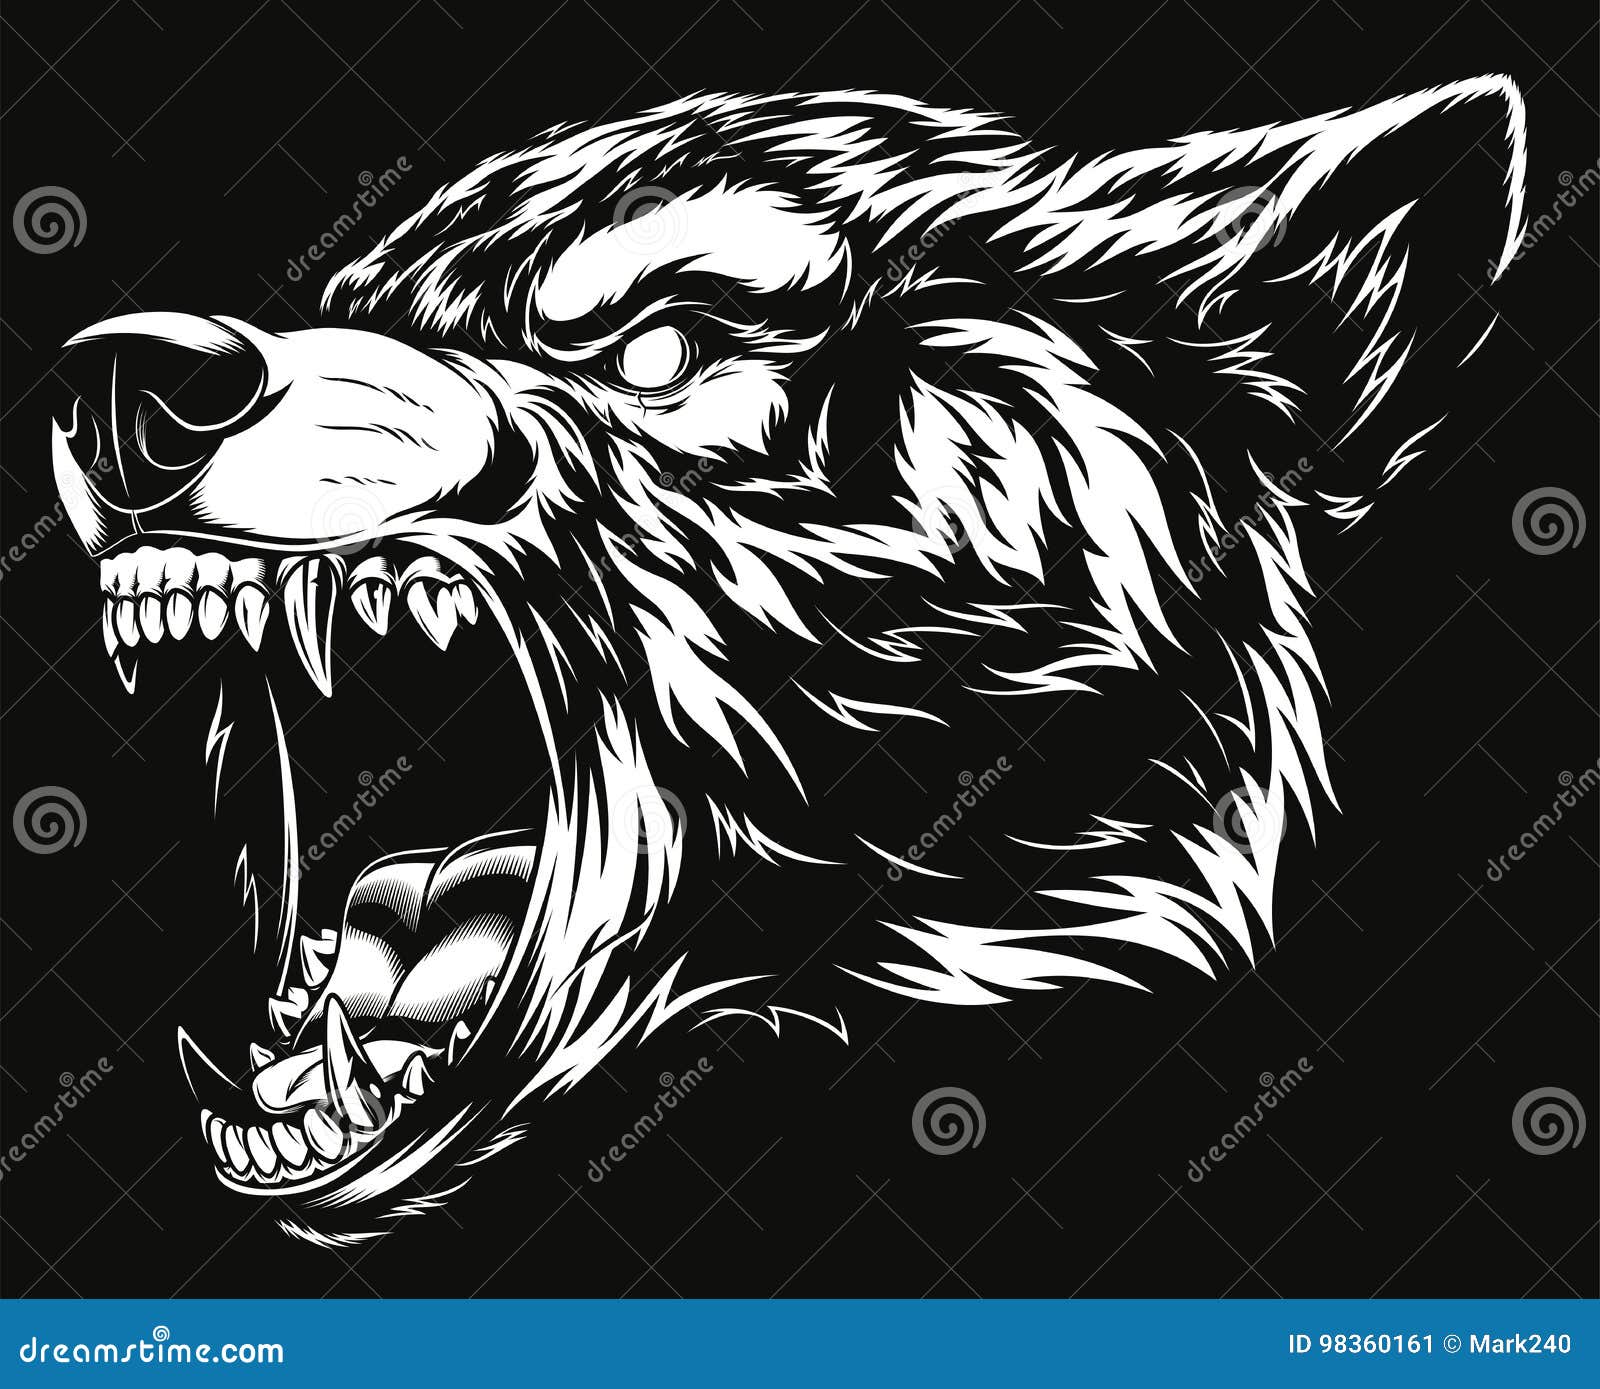 head of the ferocious wolf